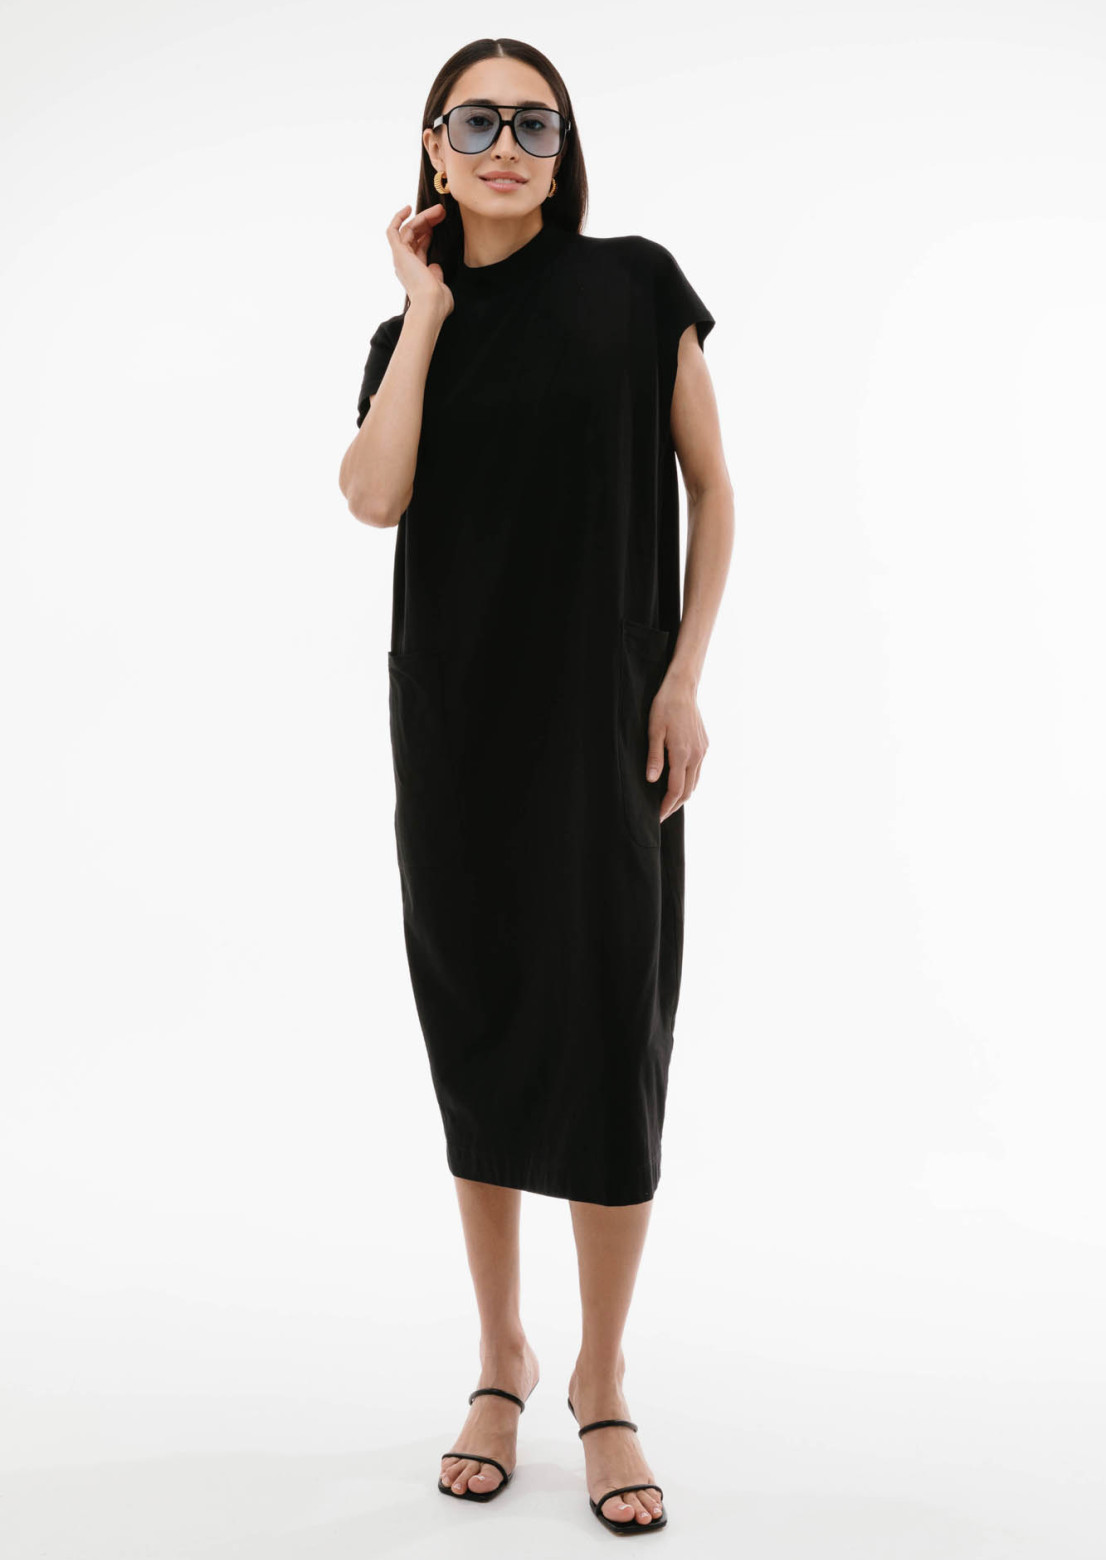 Black sleeveless dress with pocket